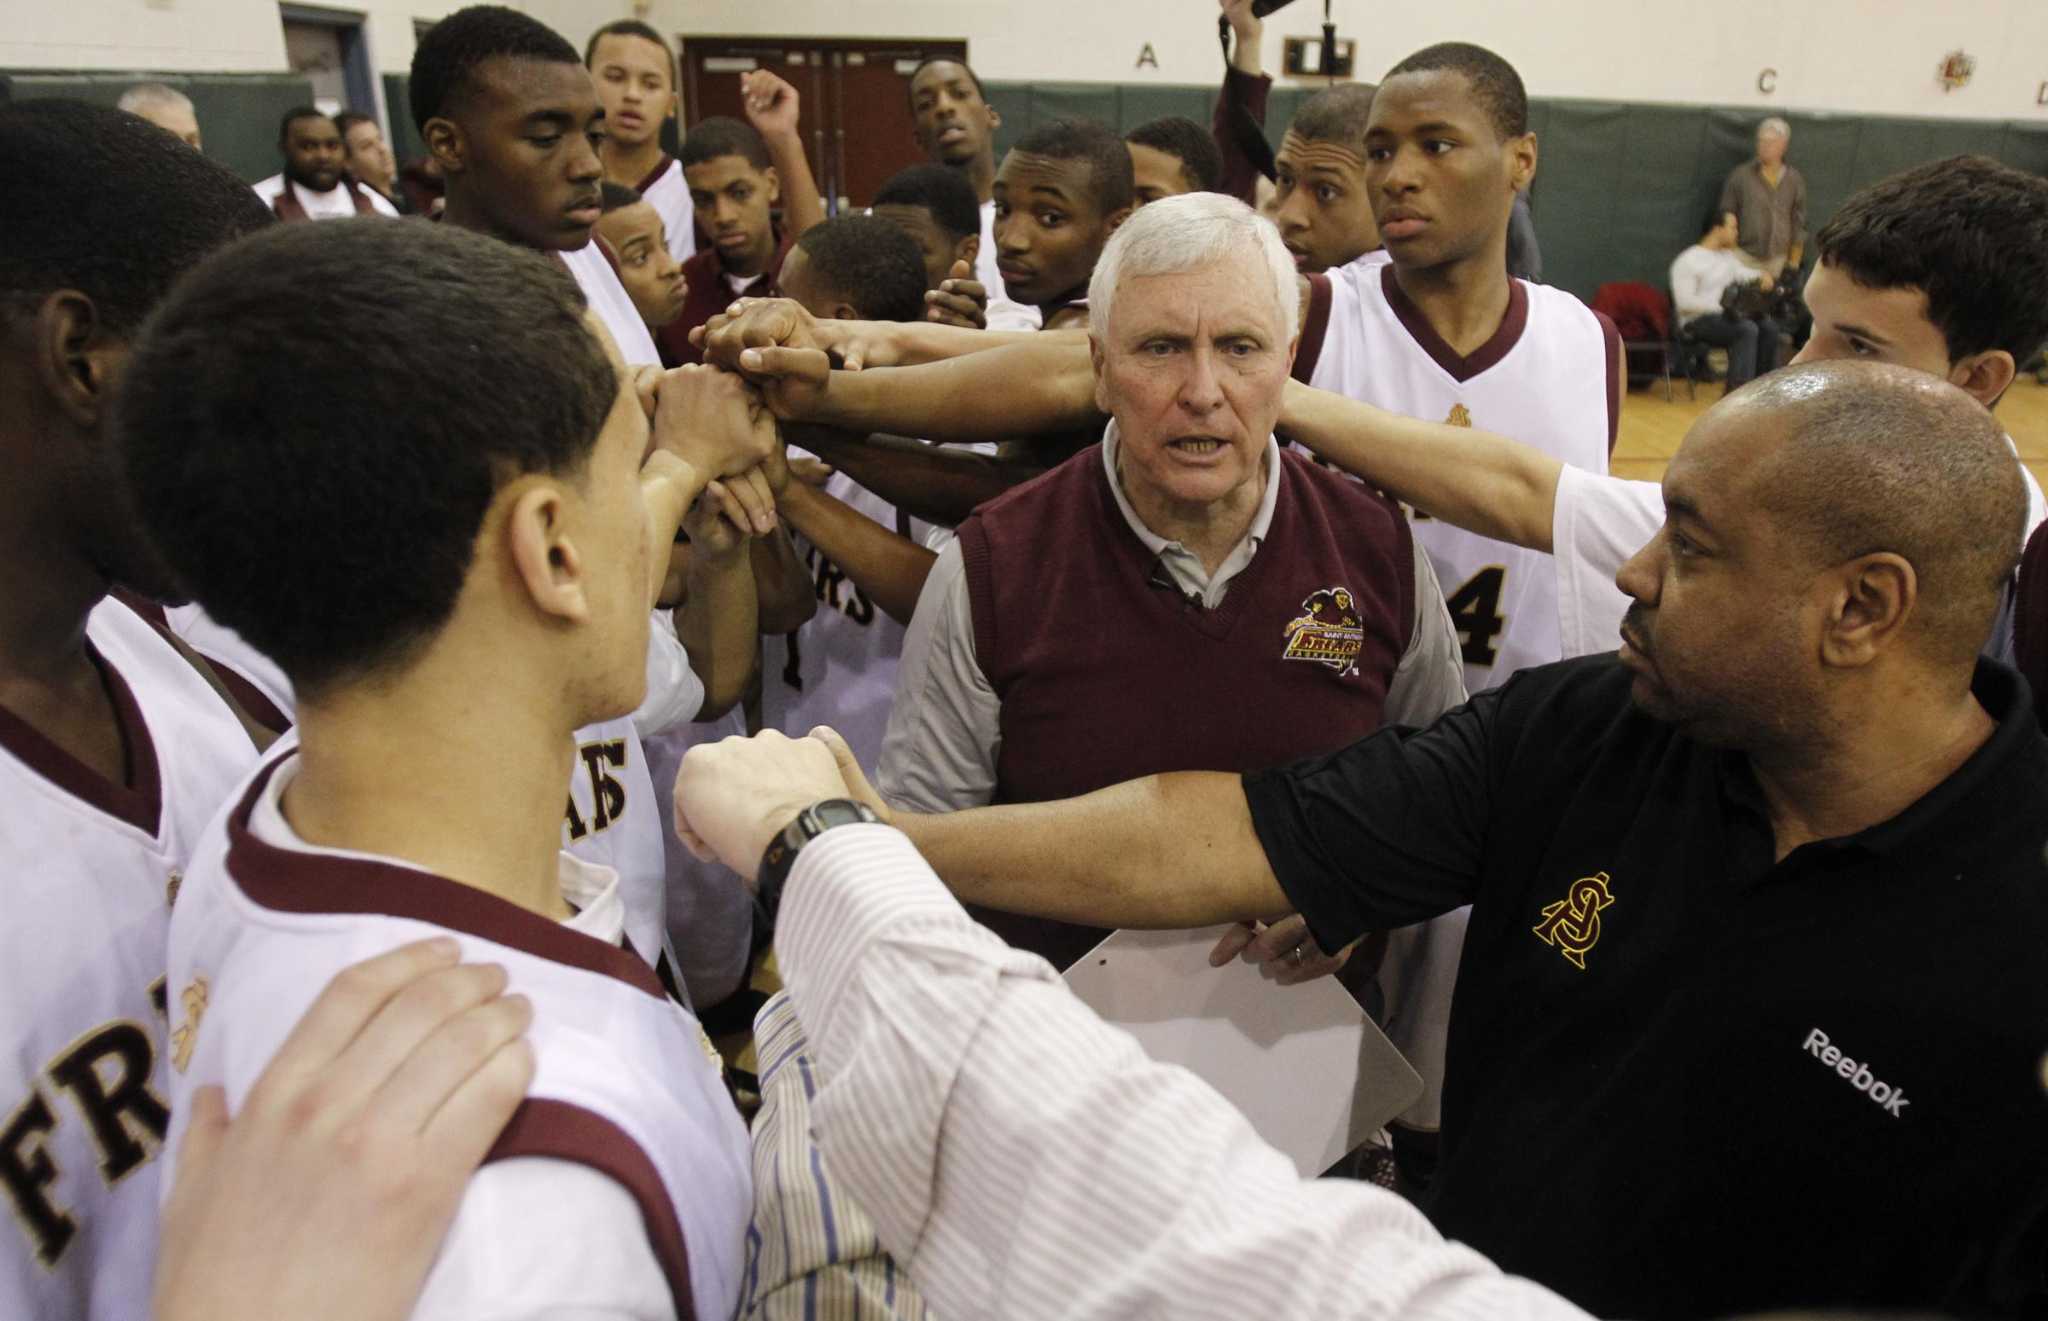 Bob Hurley still mentoring young basketball players